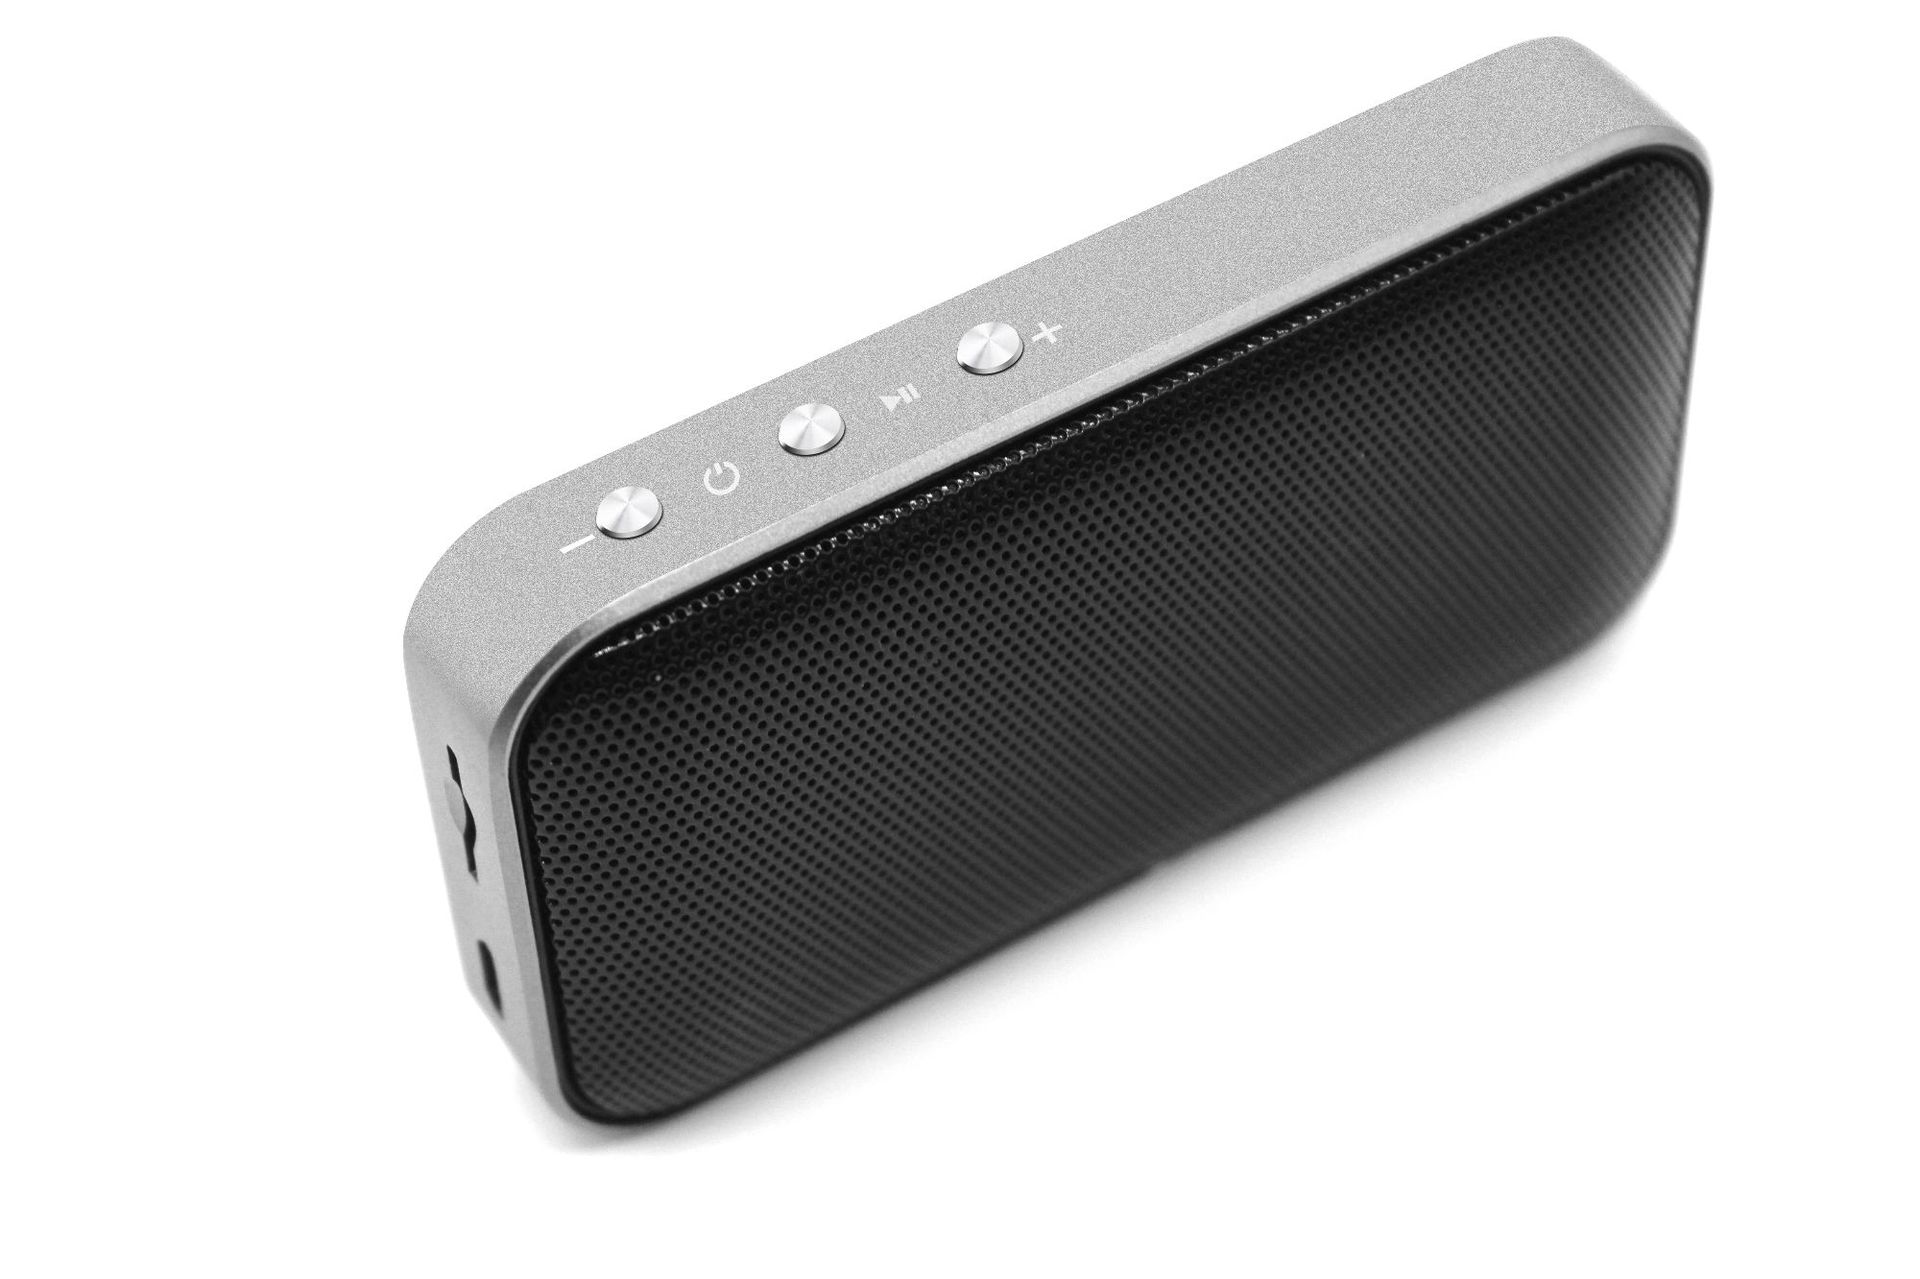 Wireless Outdoor Portable Ultra-thin Bluetooth Speaker Small Steel Gun Electronic Gift Mini Pocket Speaker